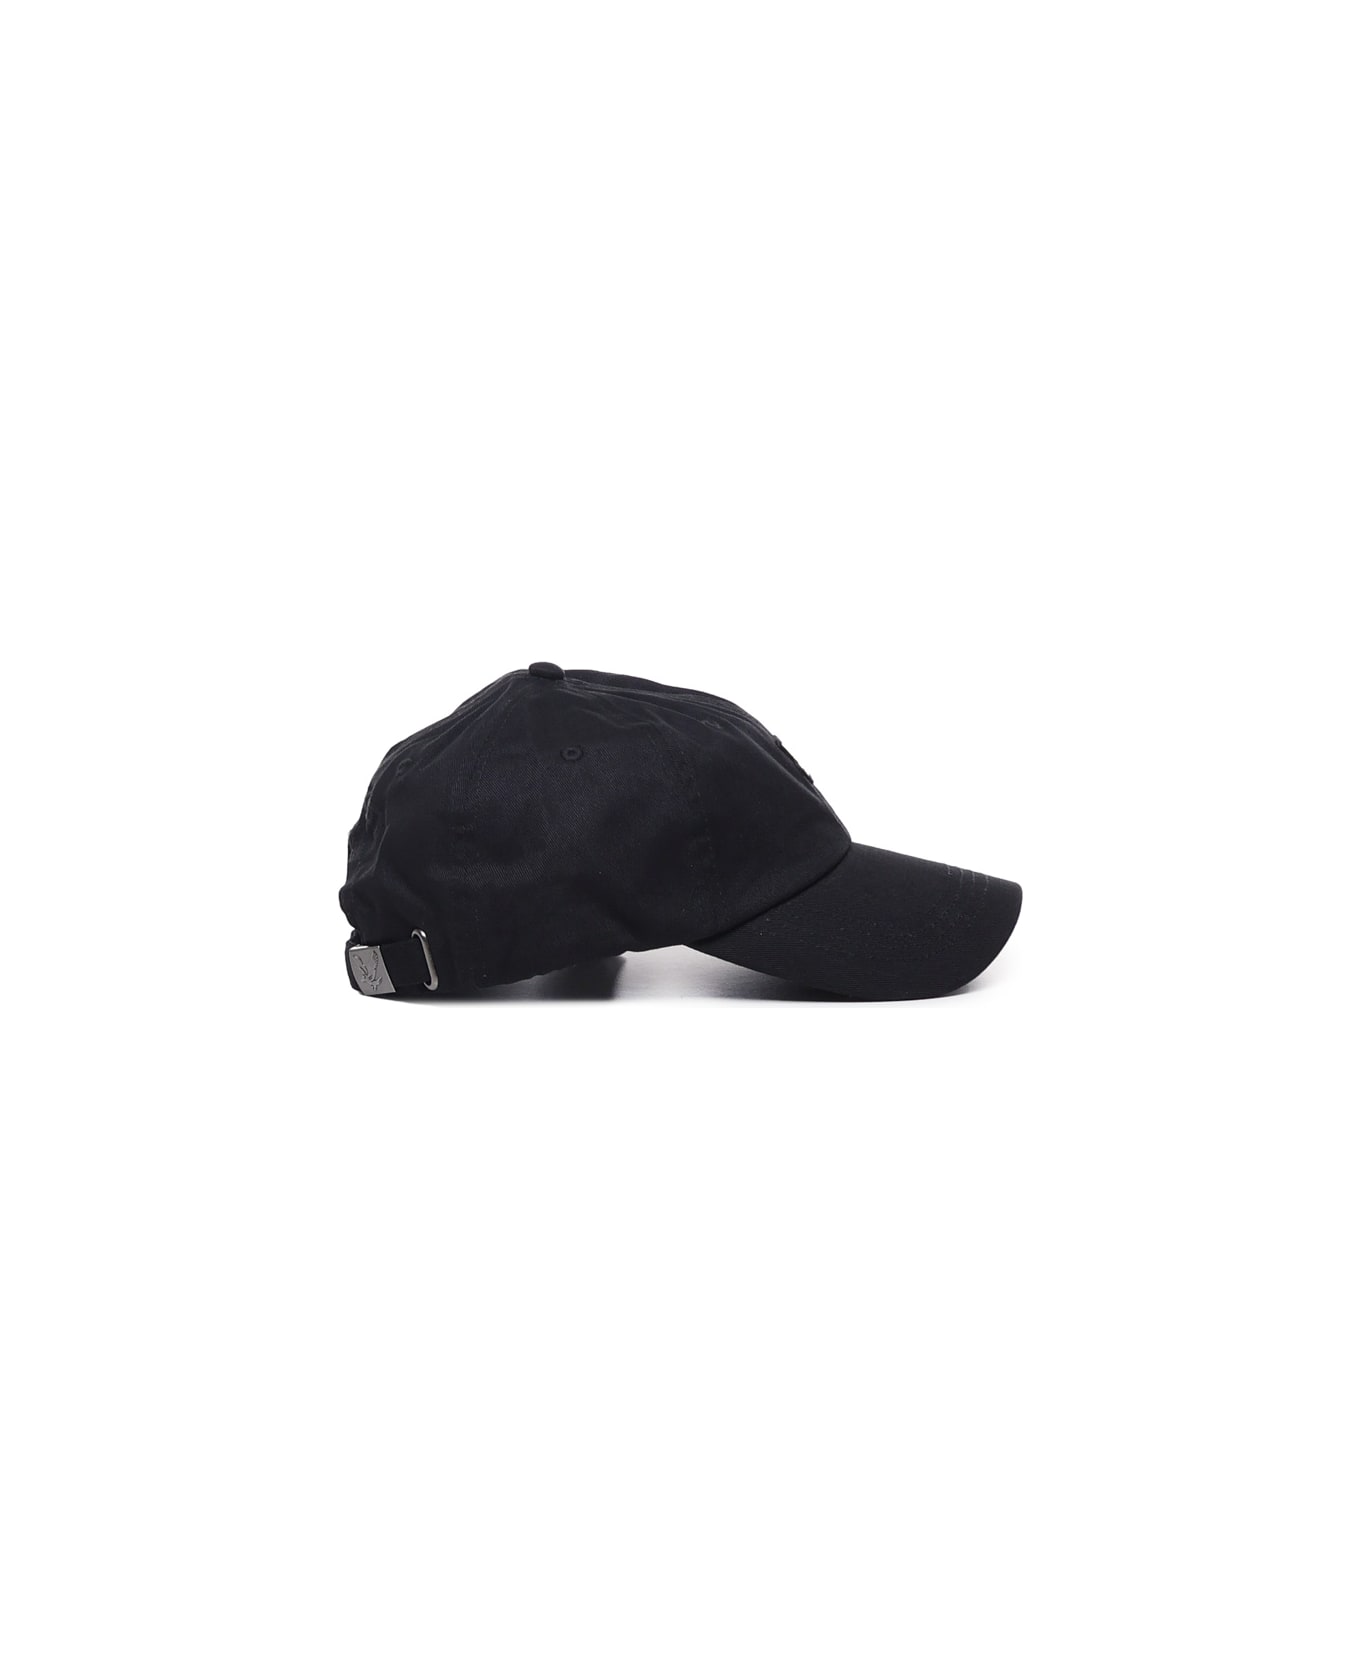 Lyle & Scott Baseball Cap - Black 帽子